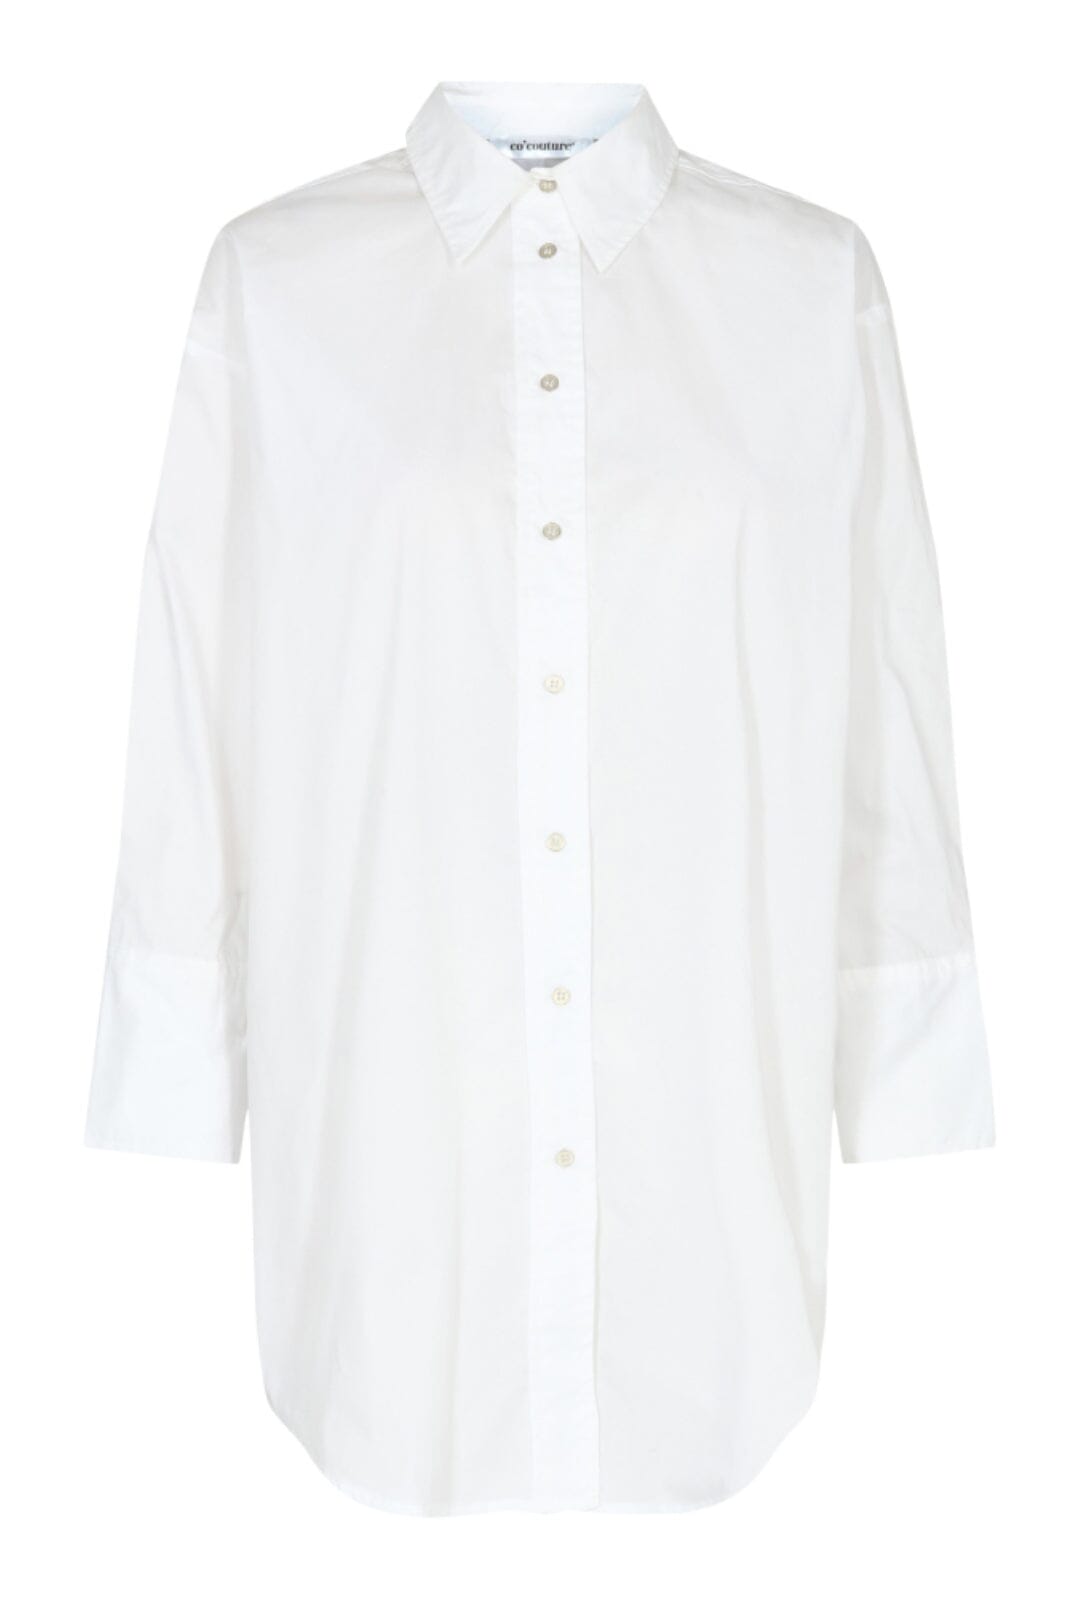 Co´couture - Ellice Shirt - White Skjorter 